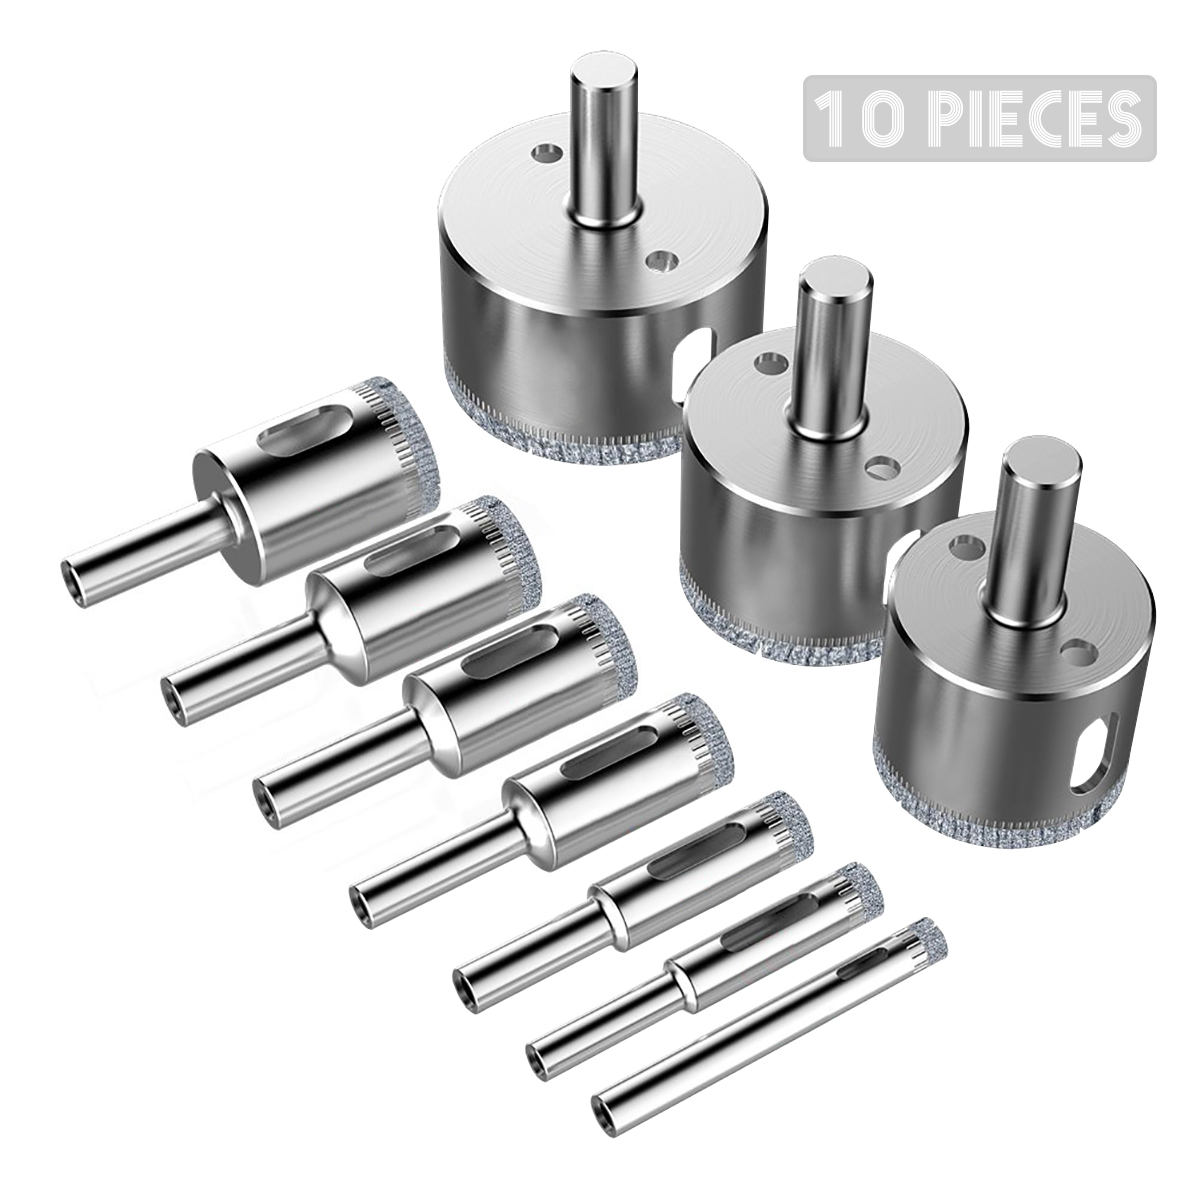 Drillpro-10pcs-Diamond-Drill-Bit-Set-6mm-to-30mm-Diamond-Tools-Hole-Saw-Cutter-for-Glass-1177977-1